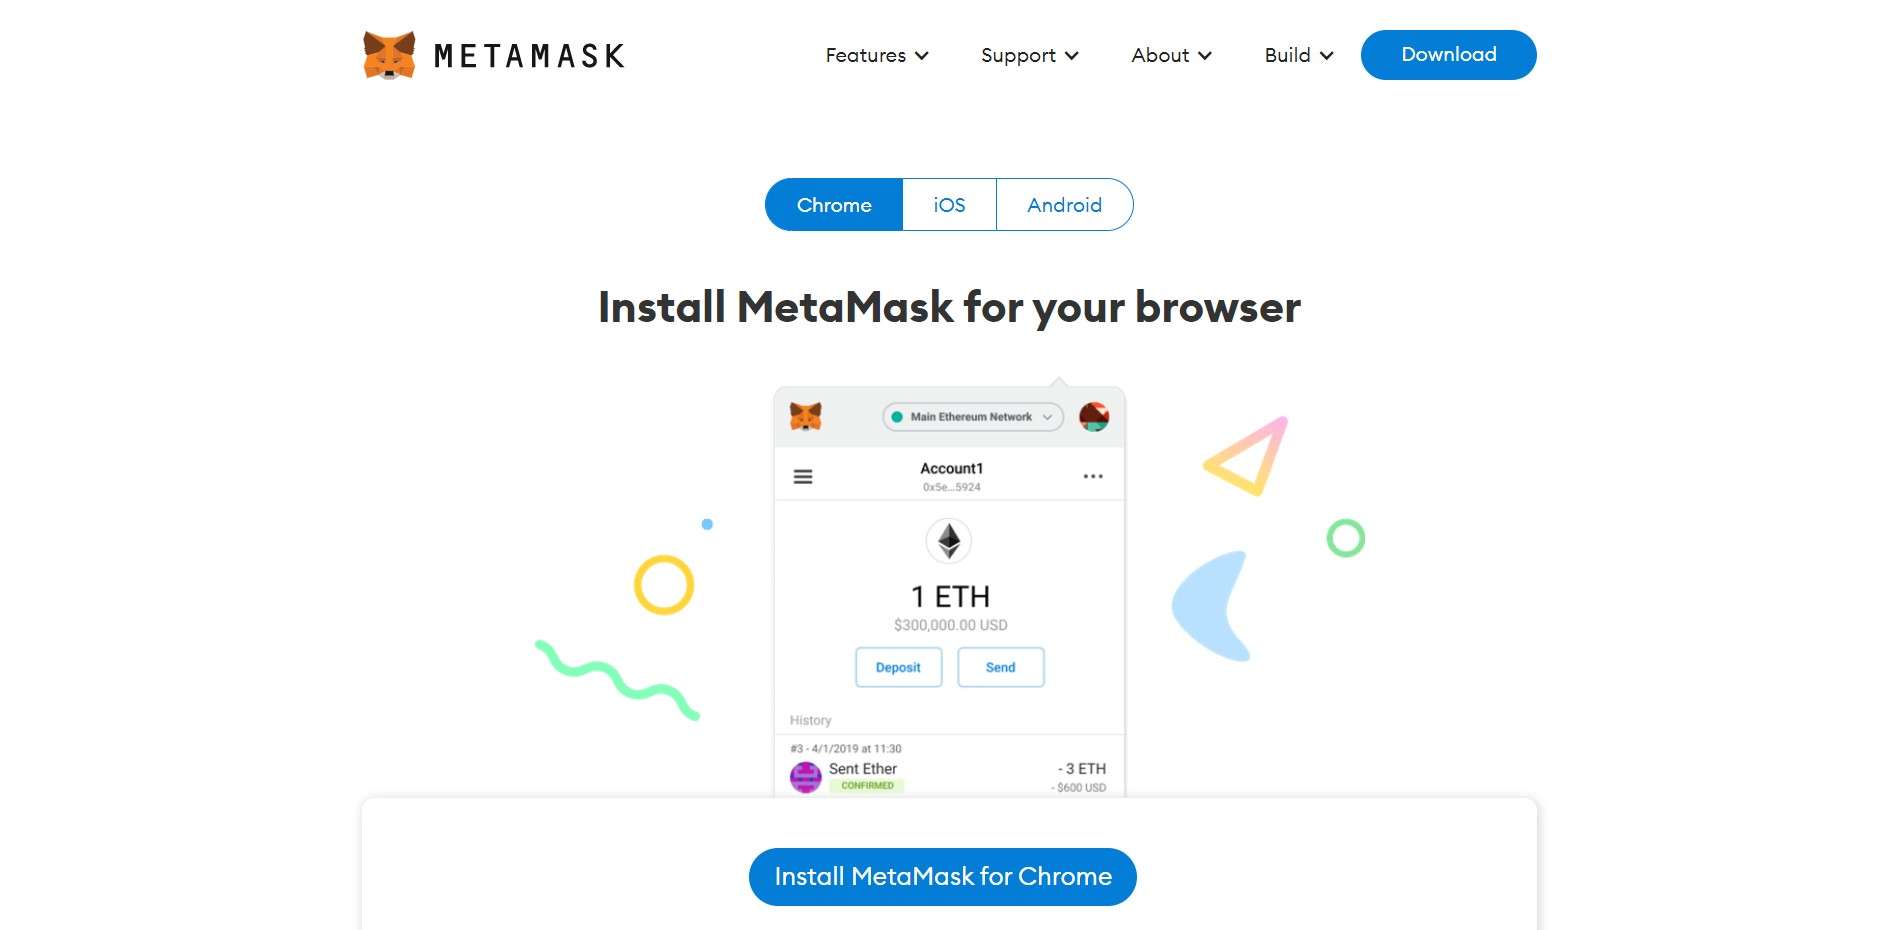 2. Install MetaMask For Chrome